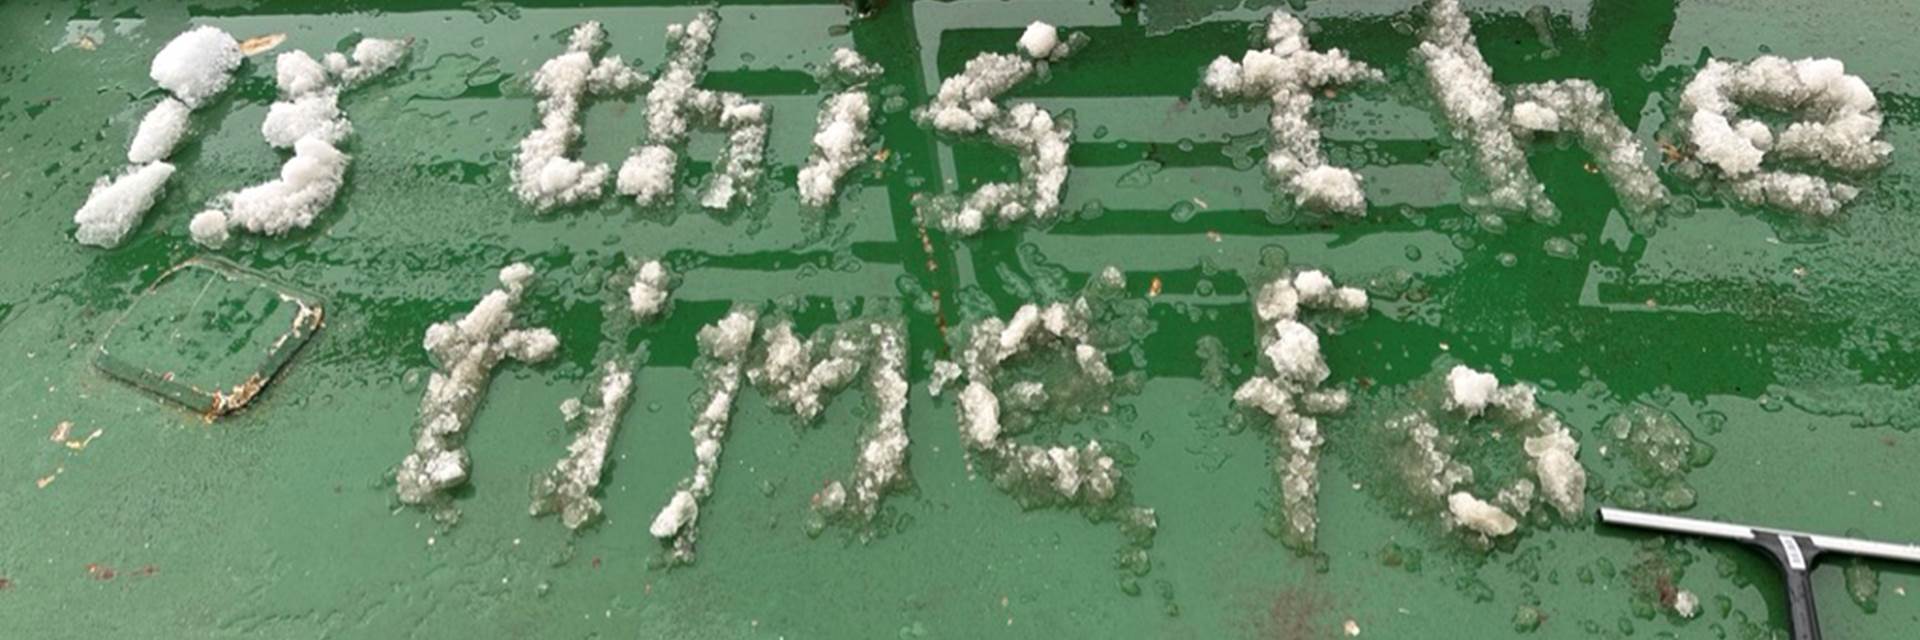 På grönt underlag står det skrivet med snö: Is this the time fo... 